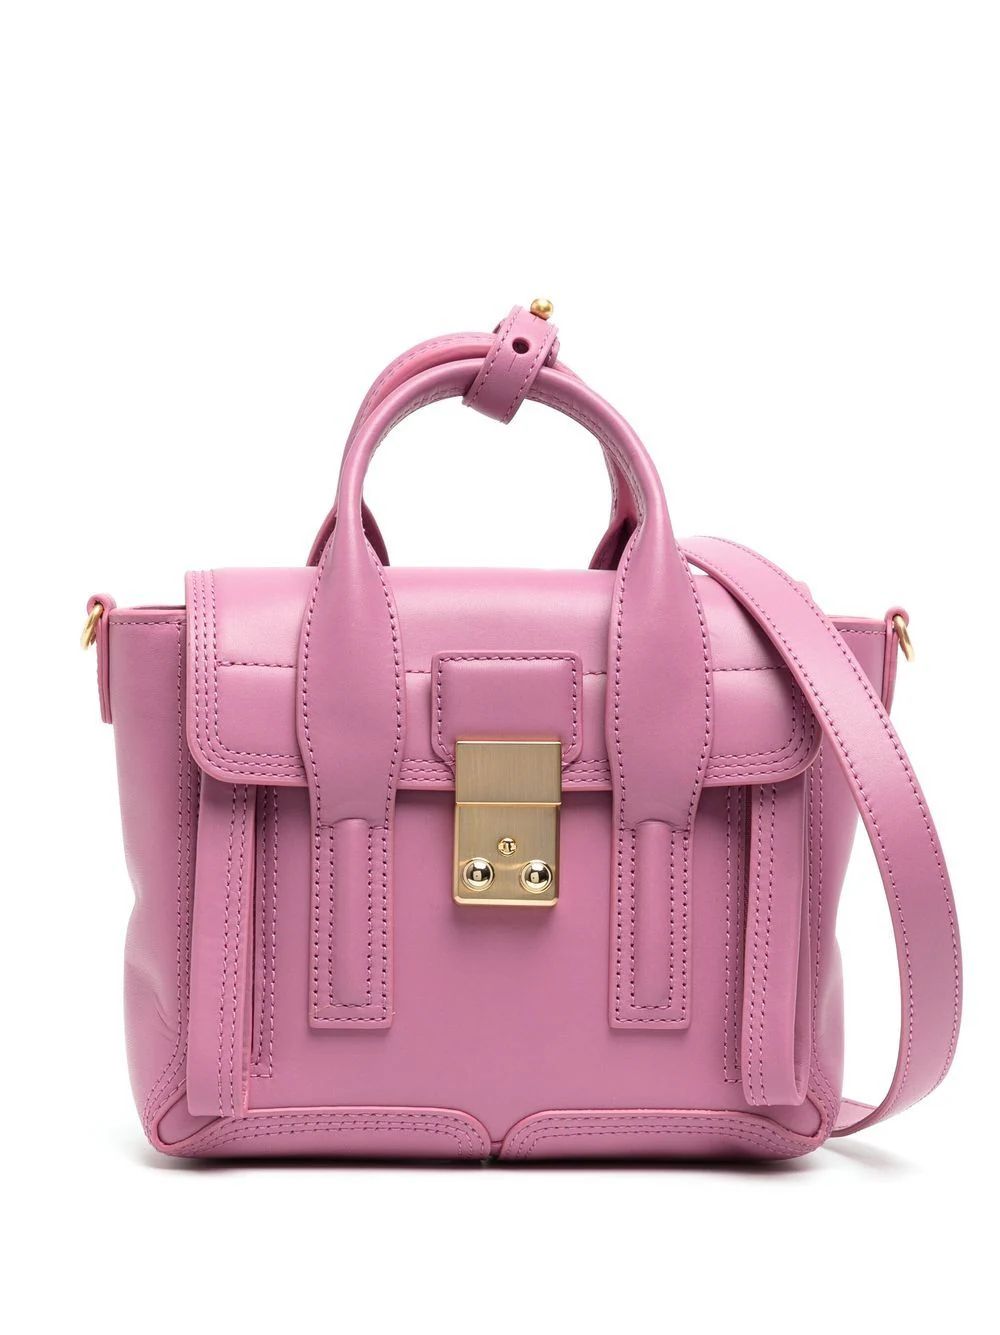 The Details3.1 Phillip LimPashli mini satchel bagorchid pink calf leather smooth grain gold-tone ... | Farfetch Global